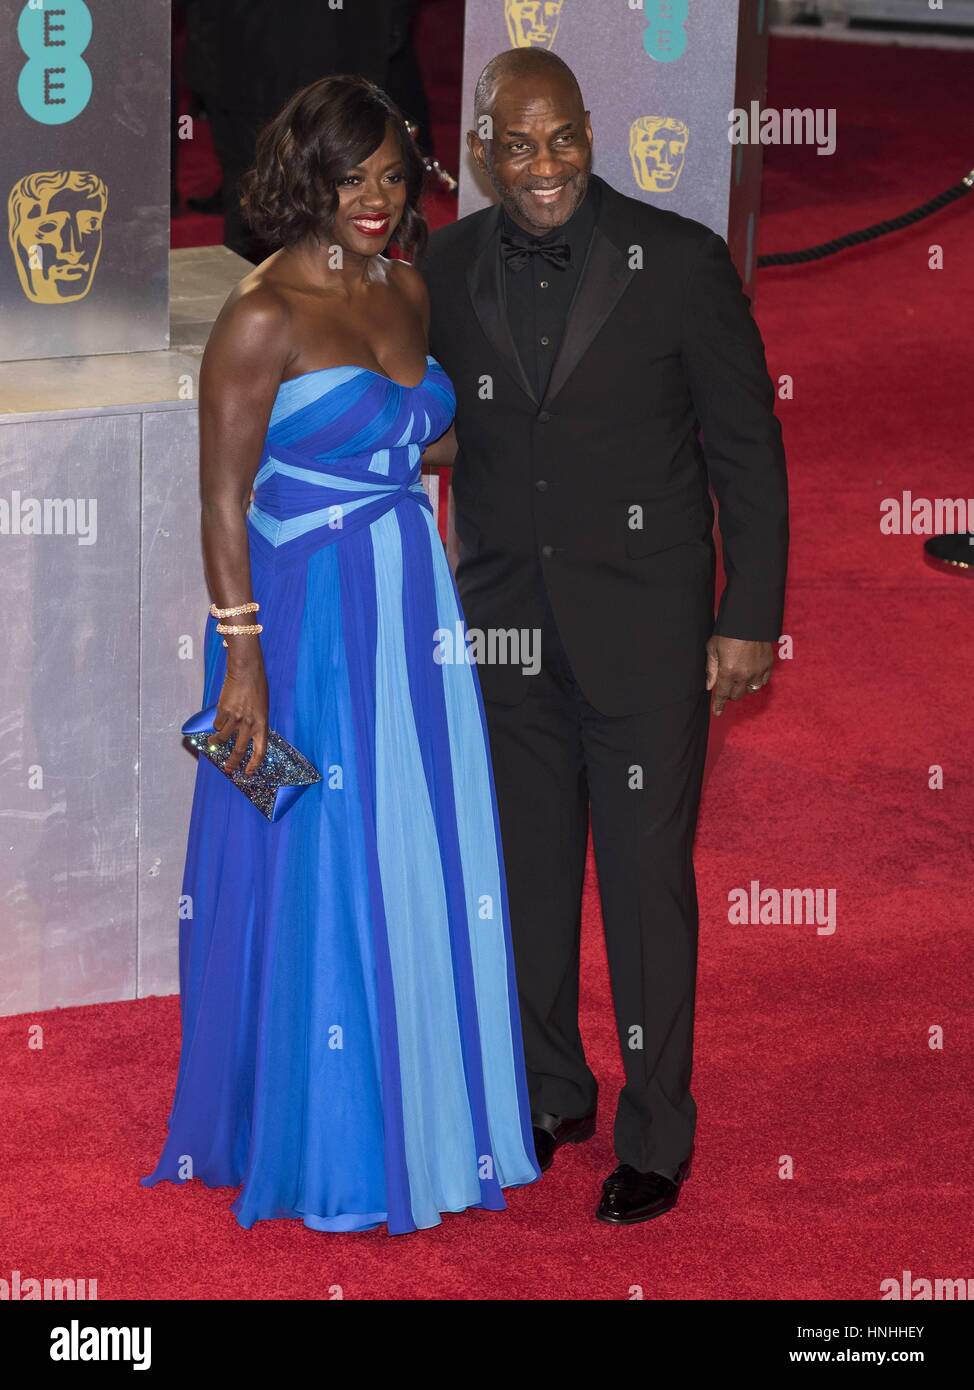 Julius Tennon and Viola Davis attends EE British Academy Film Awards 2017 at the Royal Albert Hall. London, England, UK Stock Photo